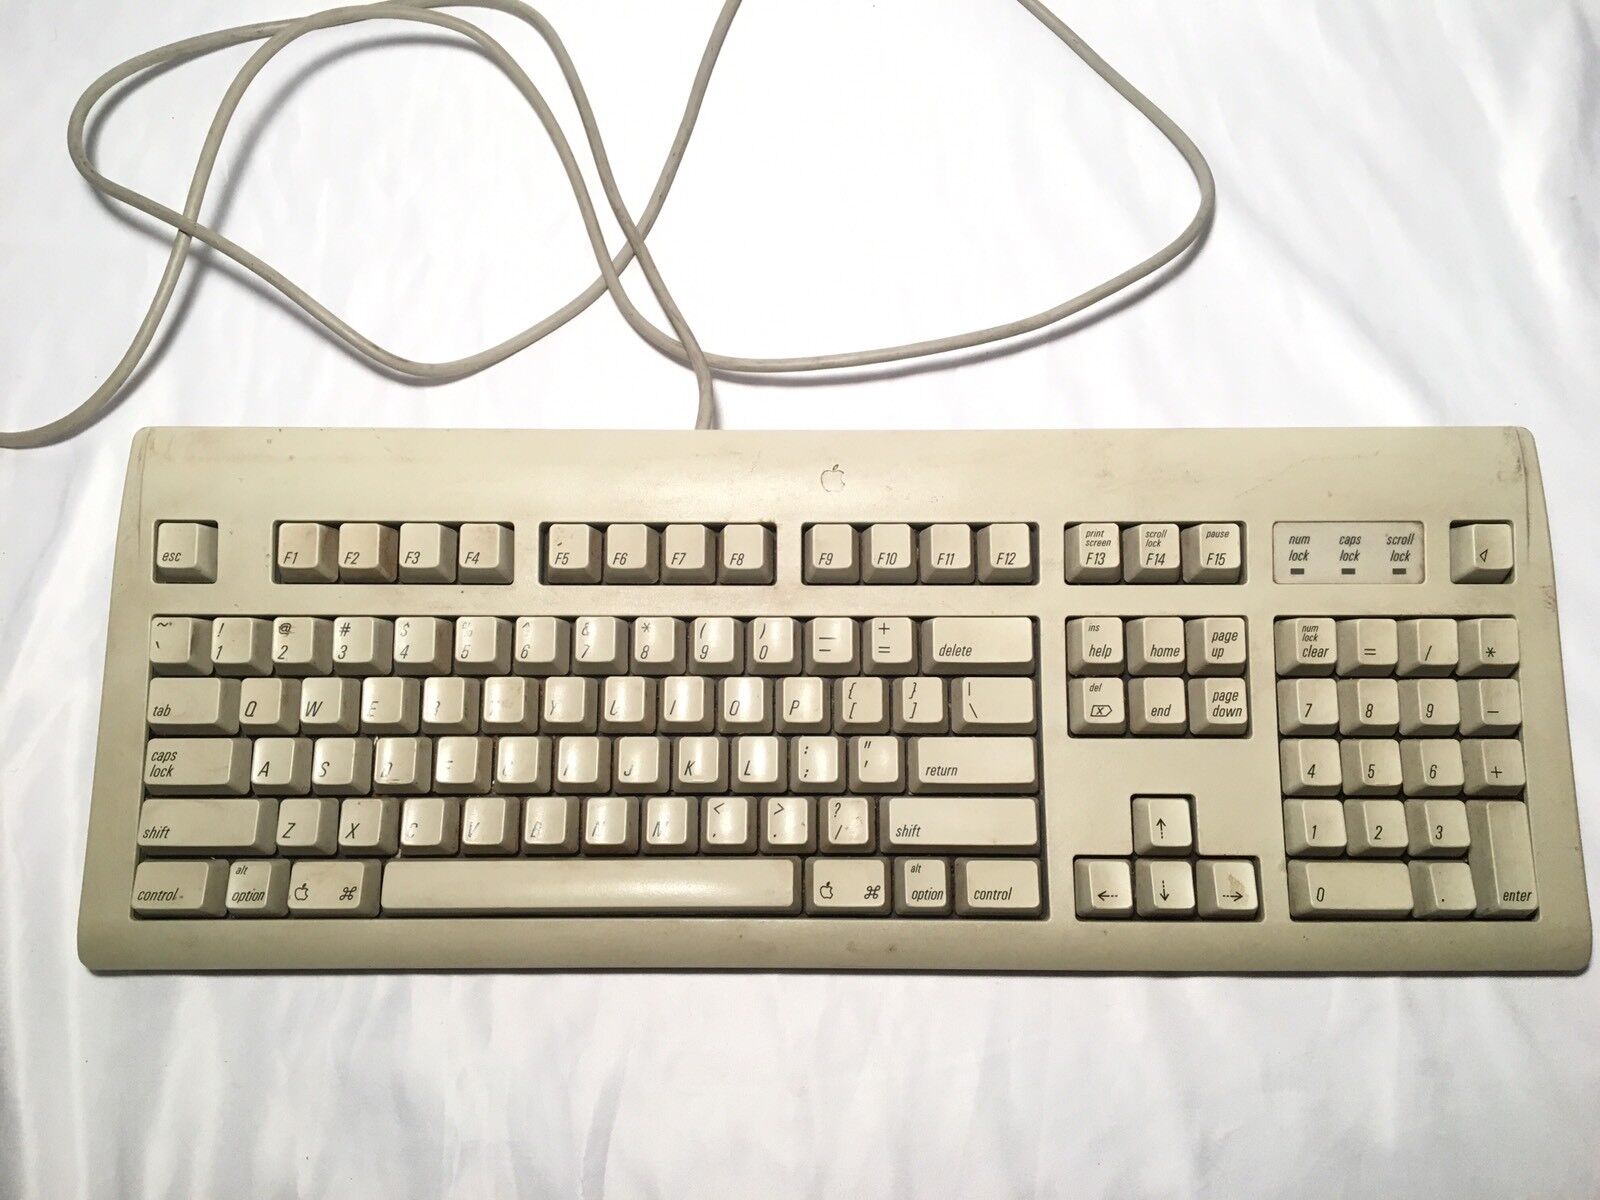 AppleDesign Keyboard M2980 Vintage Mac Macintosh Accessory (No Cable)